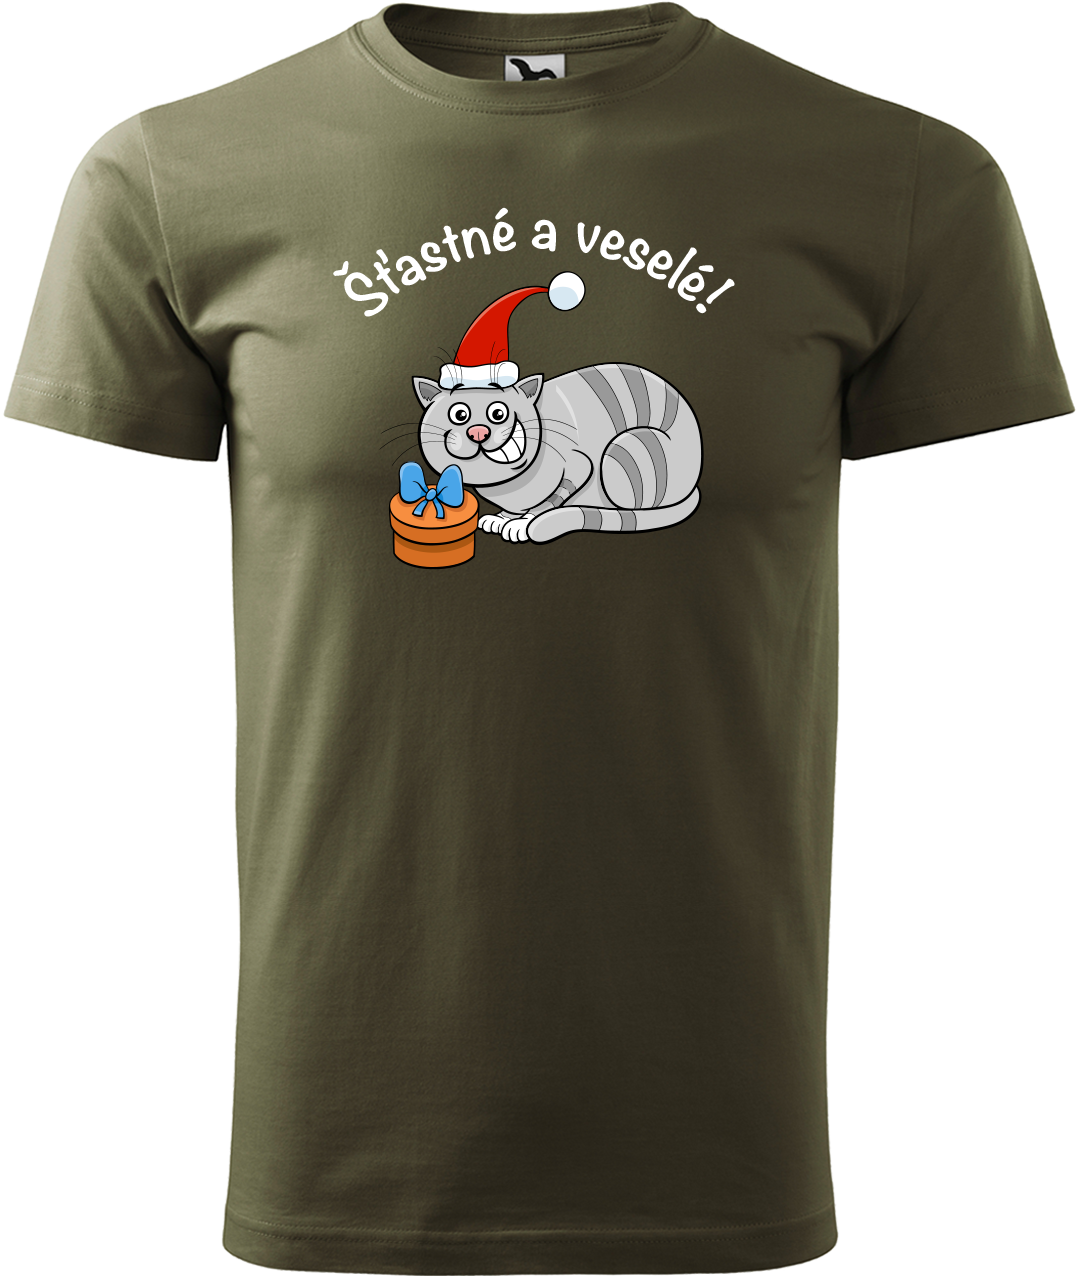 Pánské vánoční tričko - Šťastné a veselé Velikost: XL, Barva: Military (69)